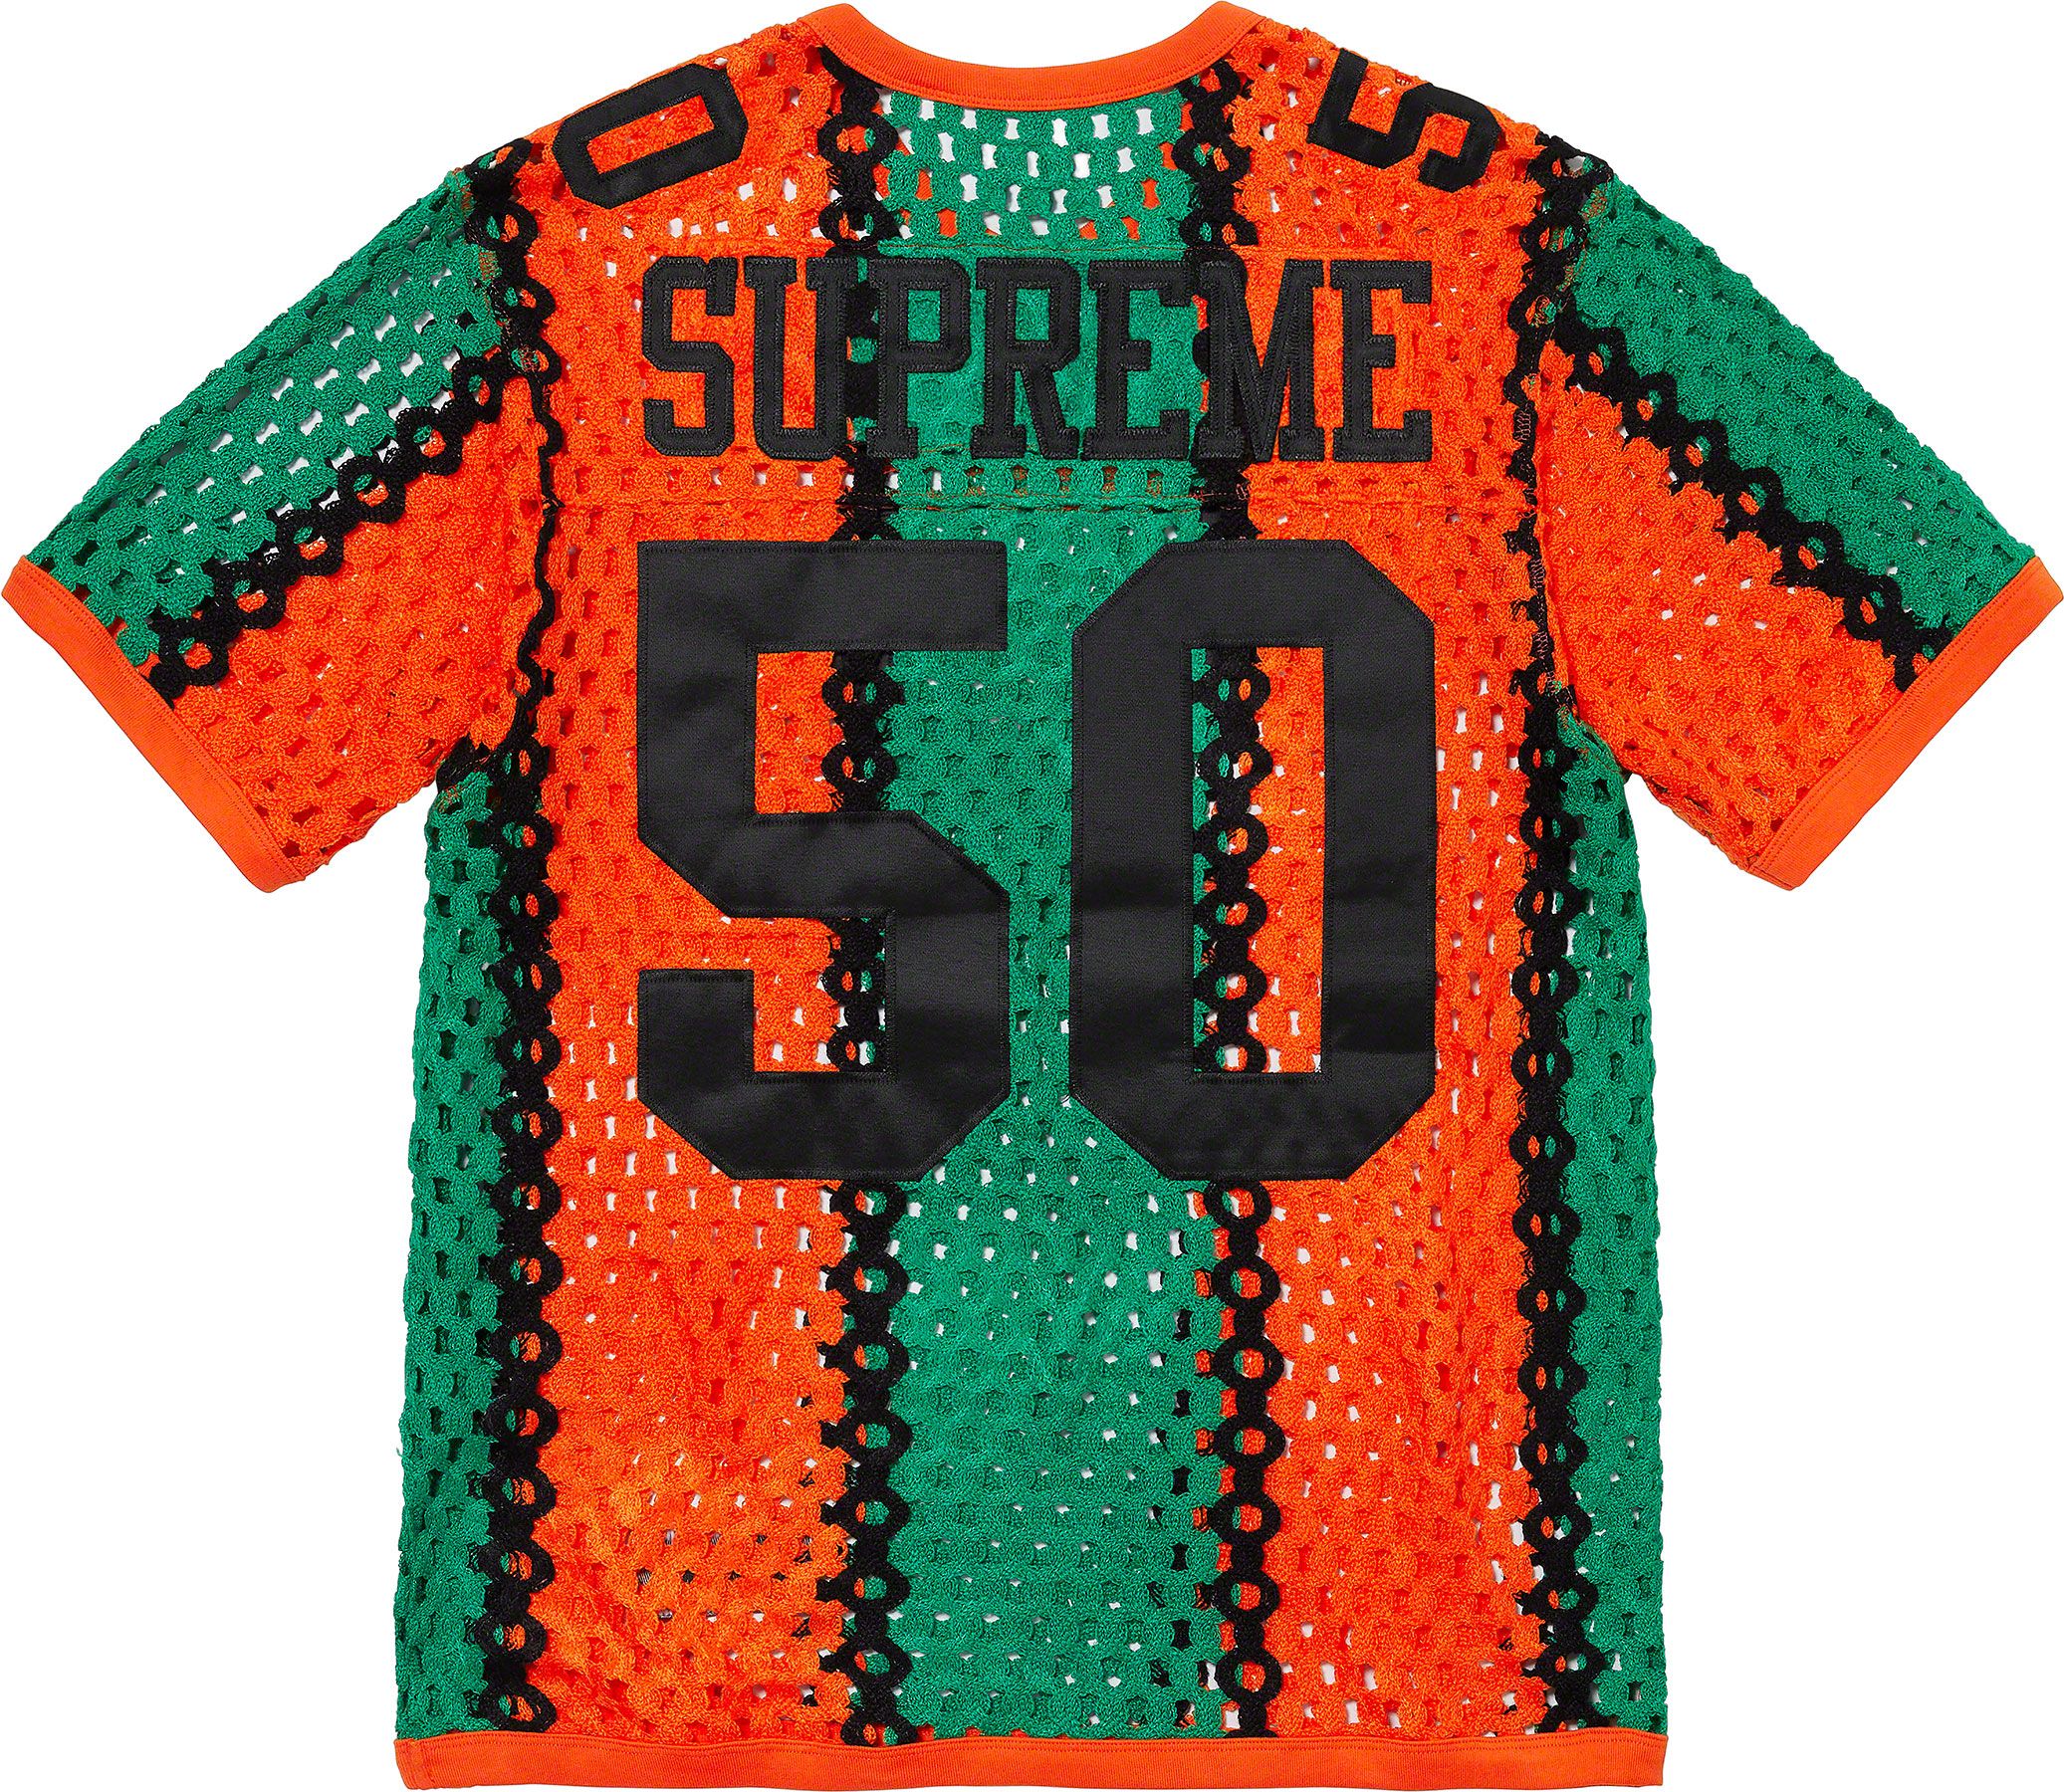 Supreme®/Umbro Jacquard Animal Print Soccer Jersey - Spring/Summer 